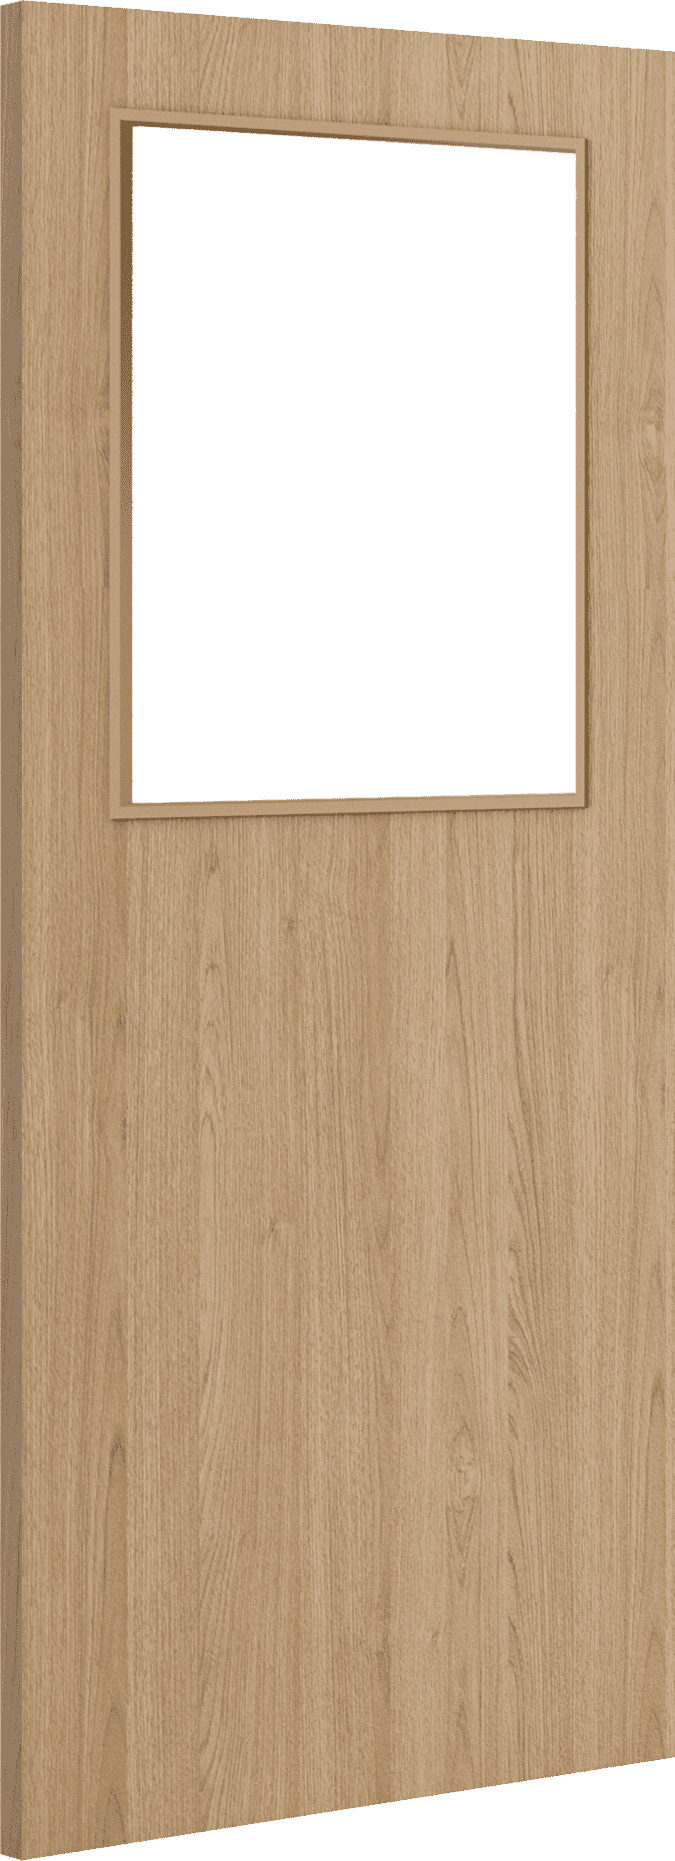 1981mm x 762mm x 44mm (30") Architectural Oak 01 Frosted Glazed - Prefinished FD30 Fire Door Blank